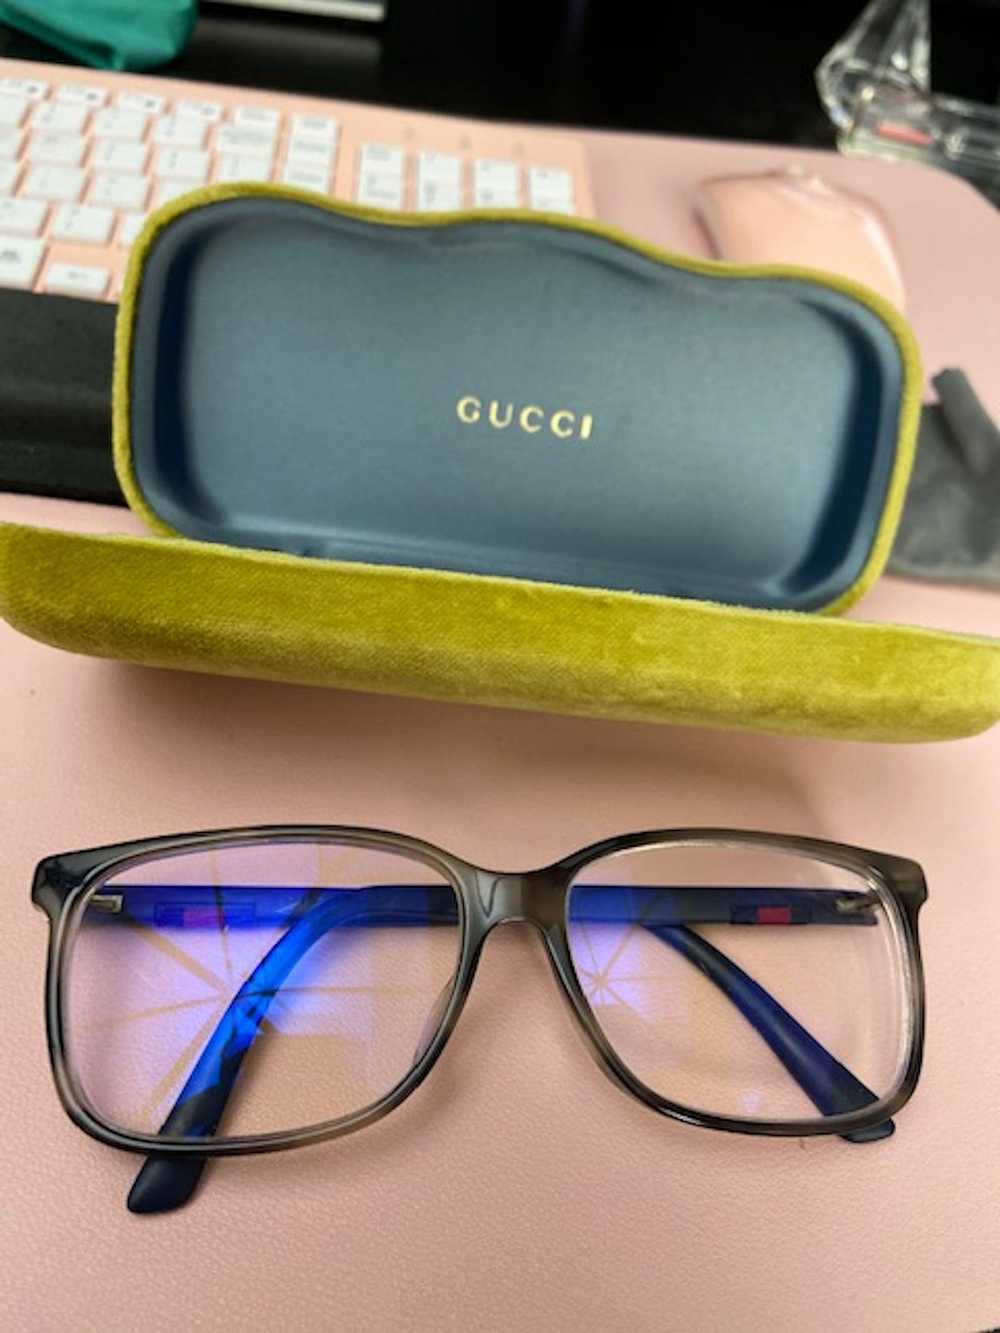 Gucci Gucci Eyeglasses - image 1